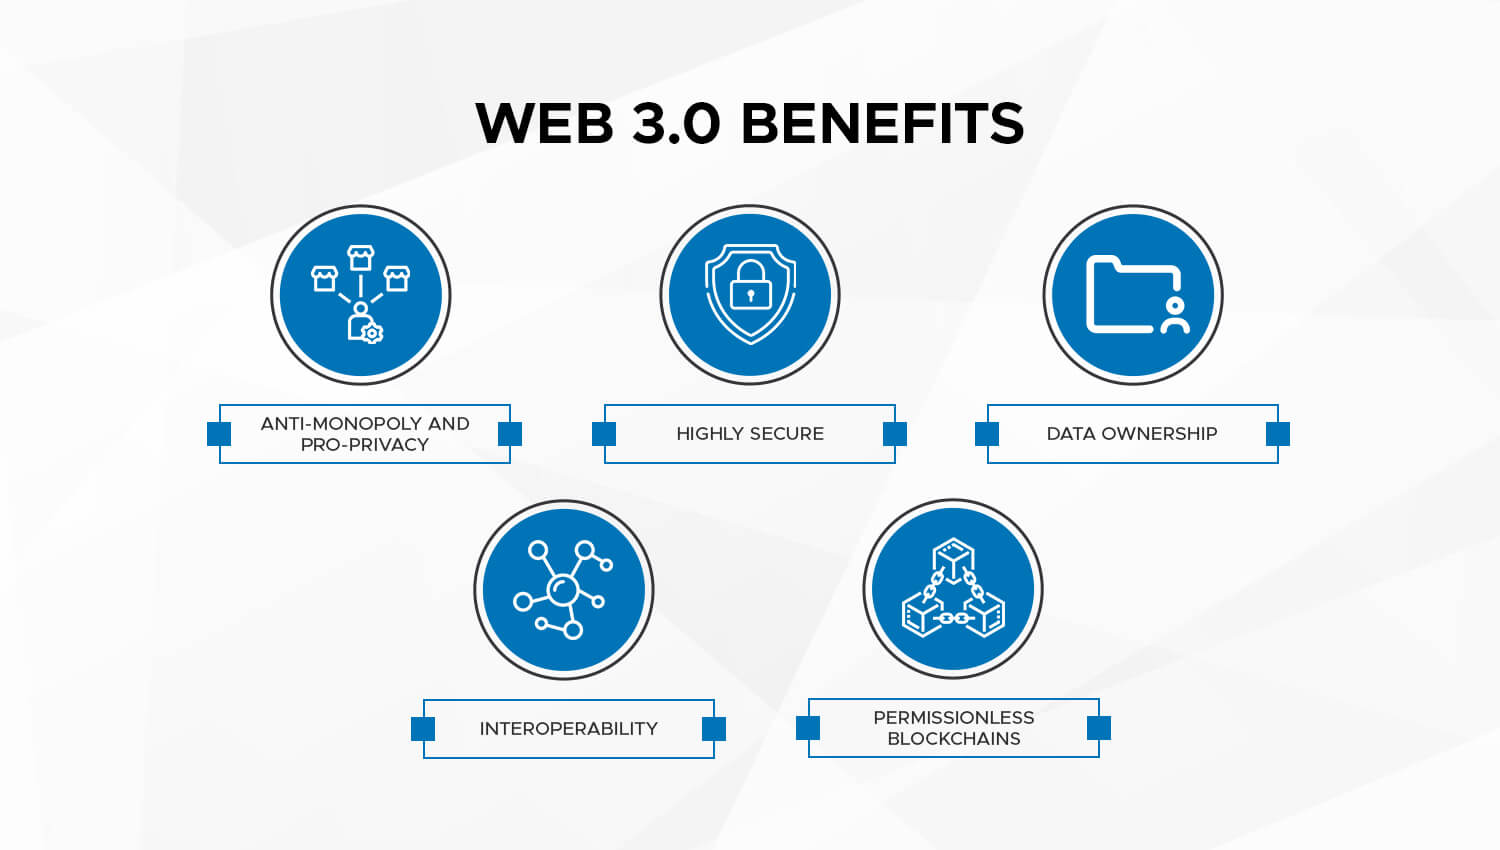 Web 3.0 Benefits